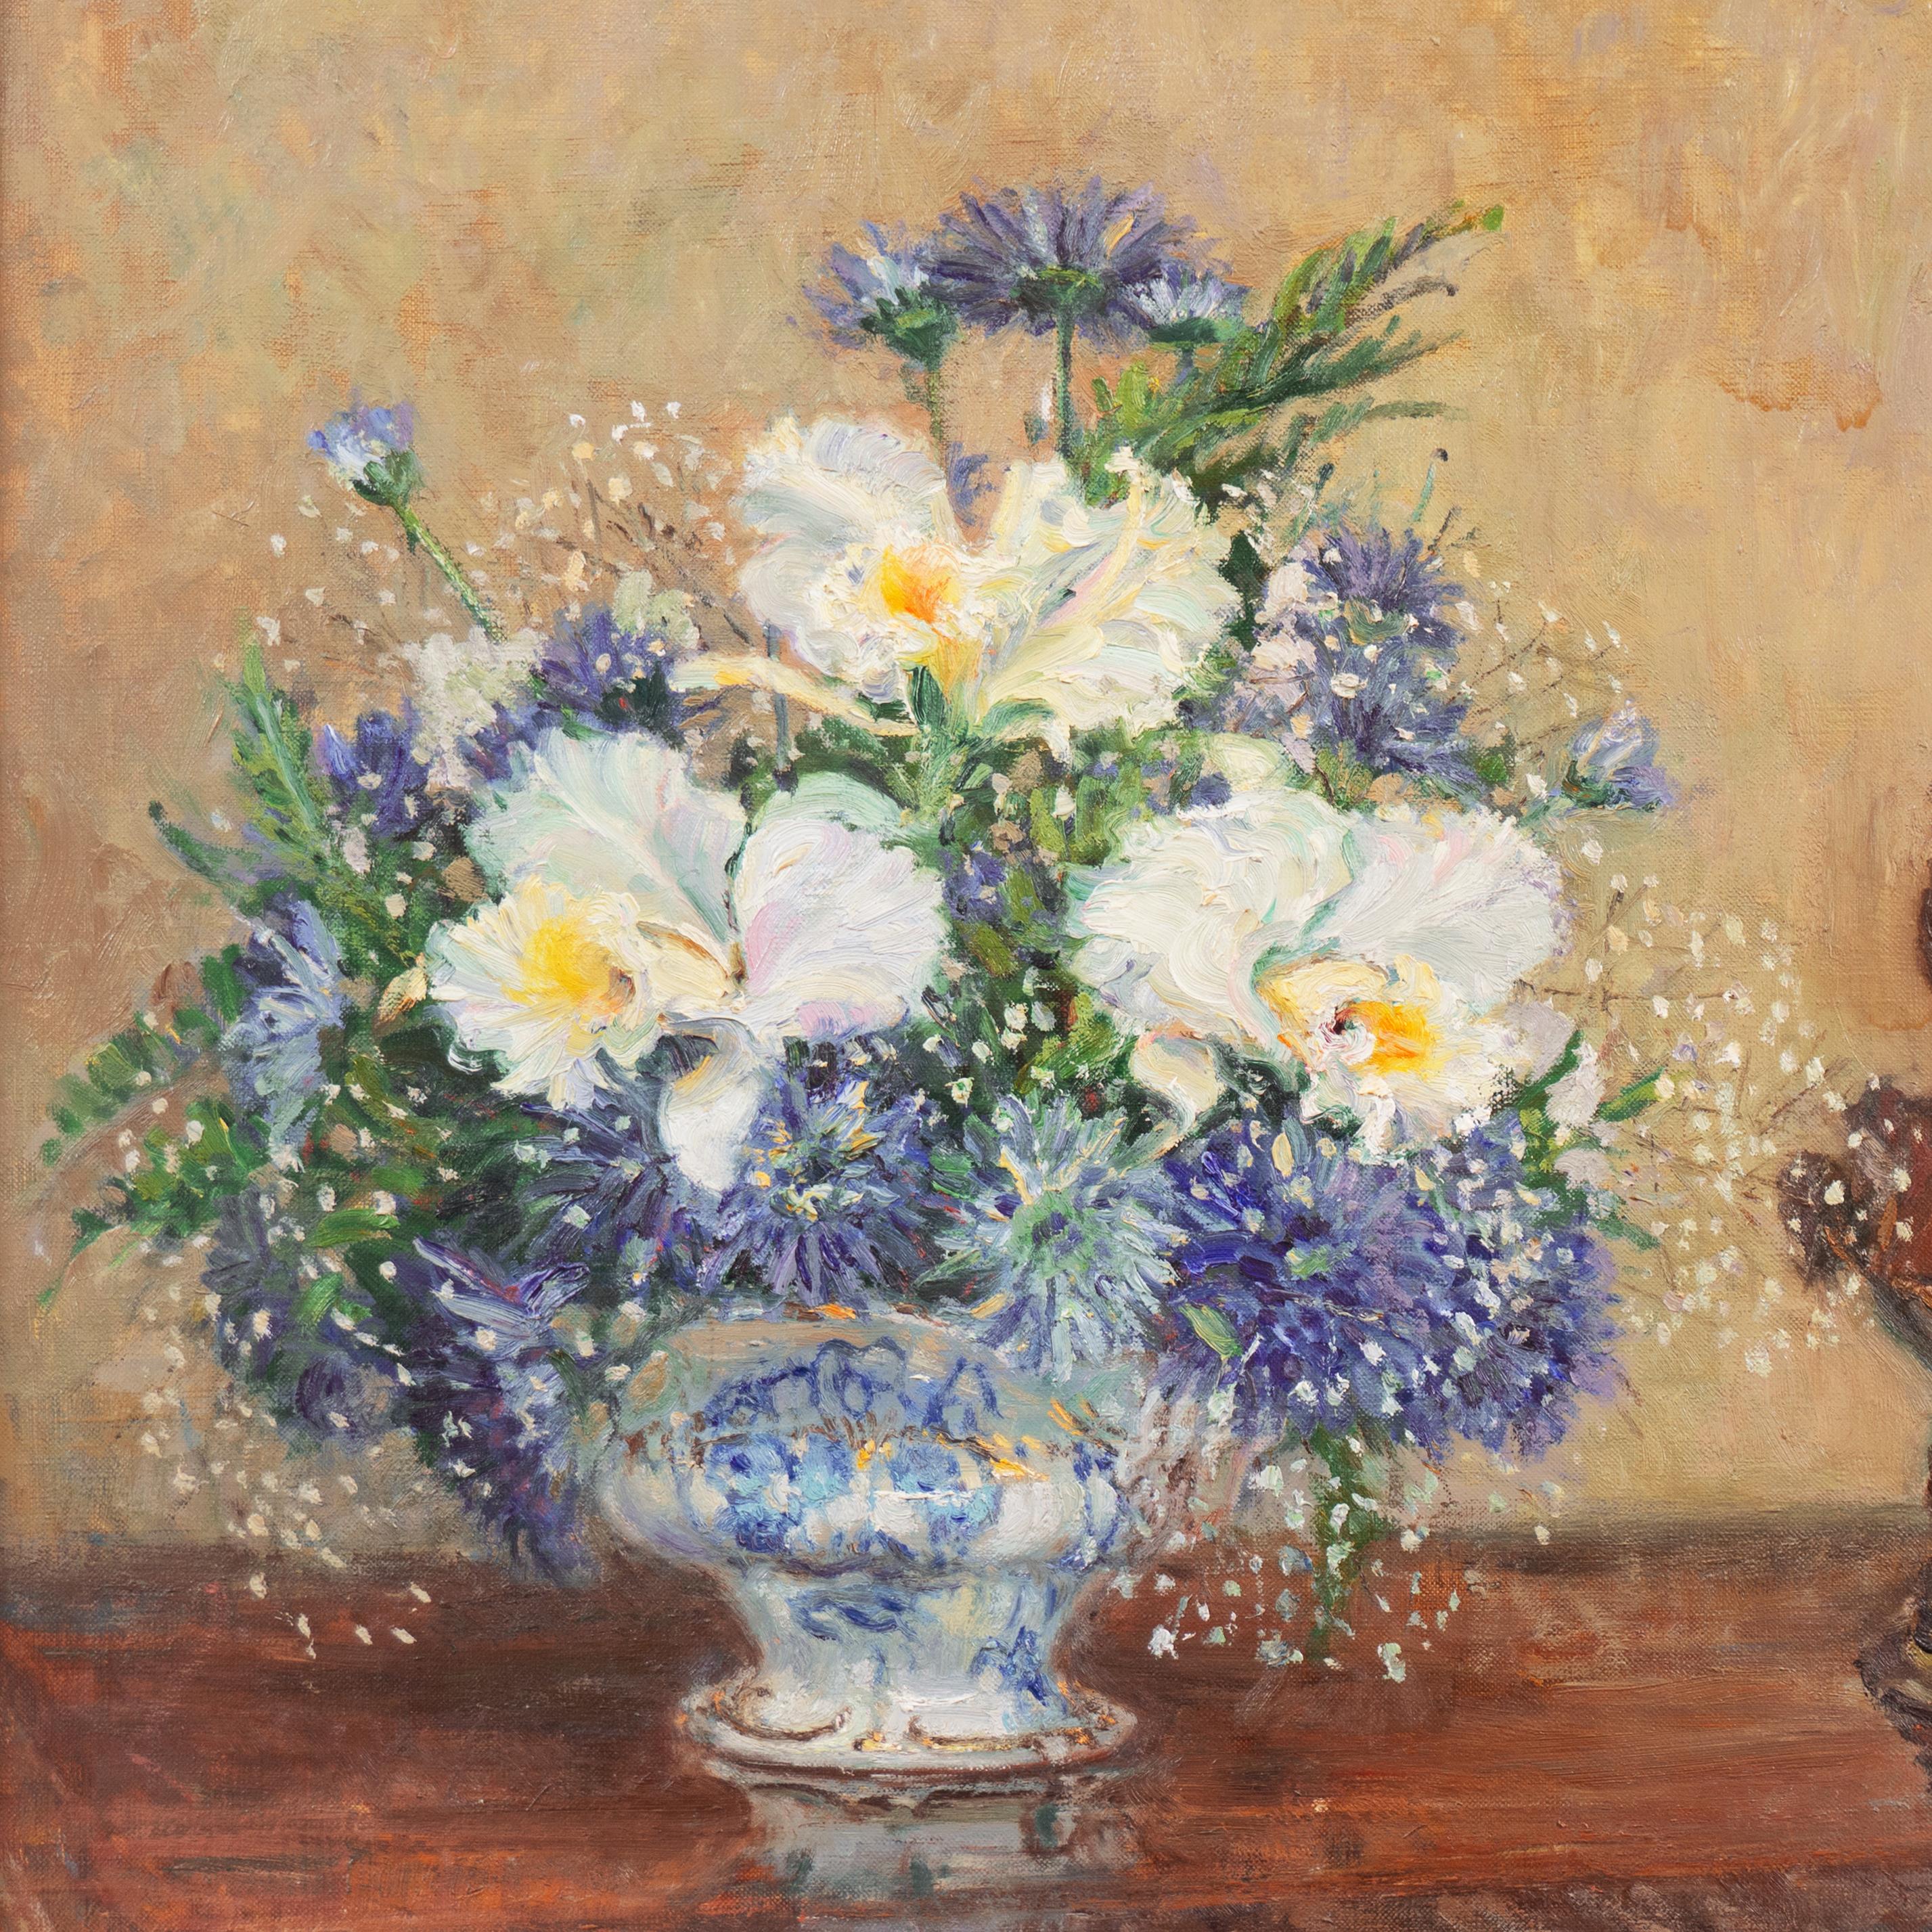 'Irises & Cornflowers', Impressionist Floral Still Life by Oscar Winning Artist  - Brown Still-Life Painting by Alan Maley